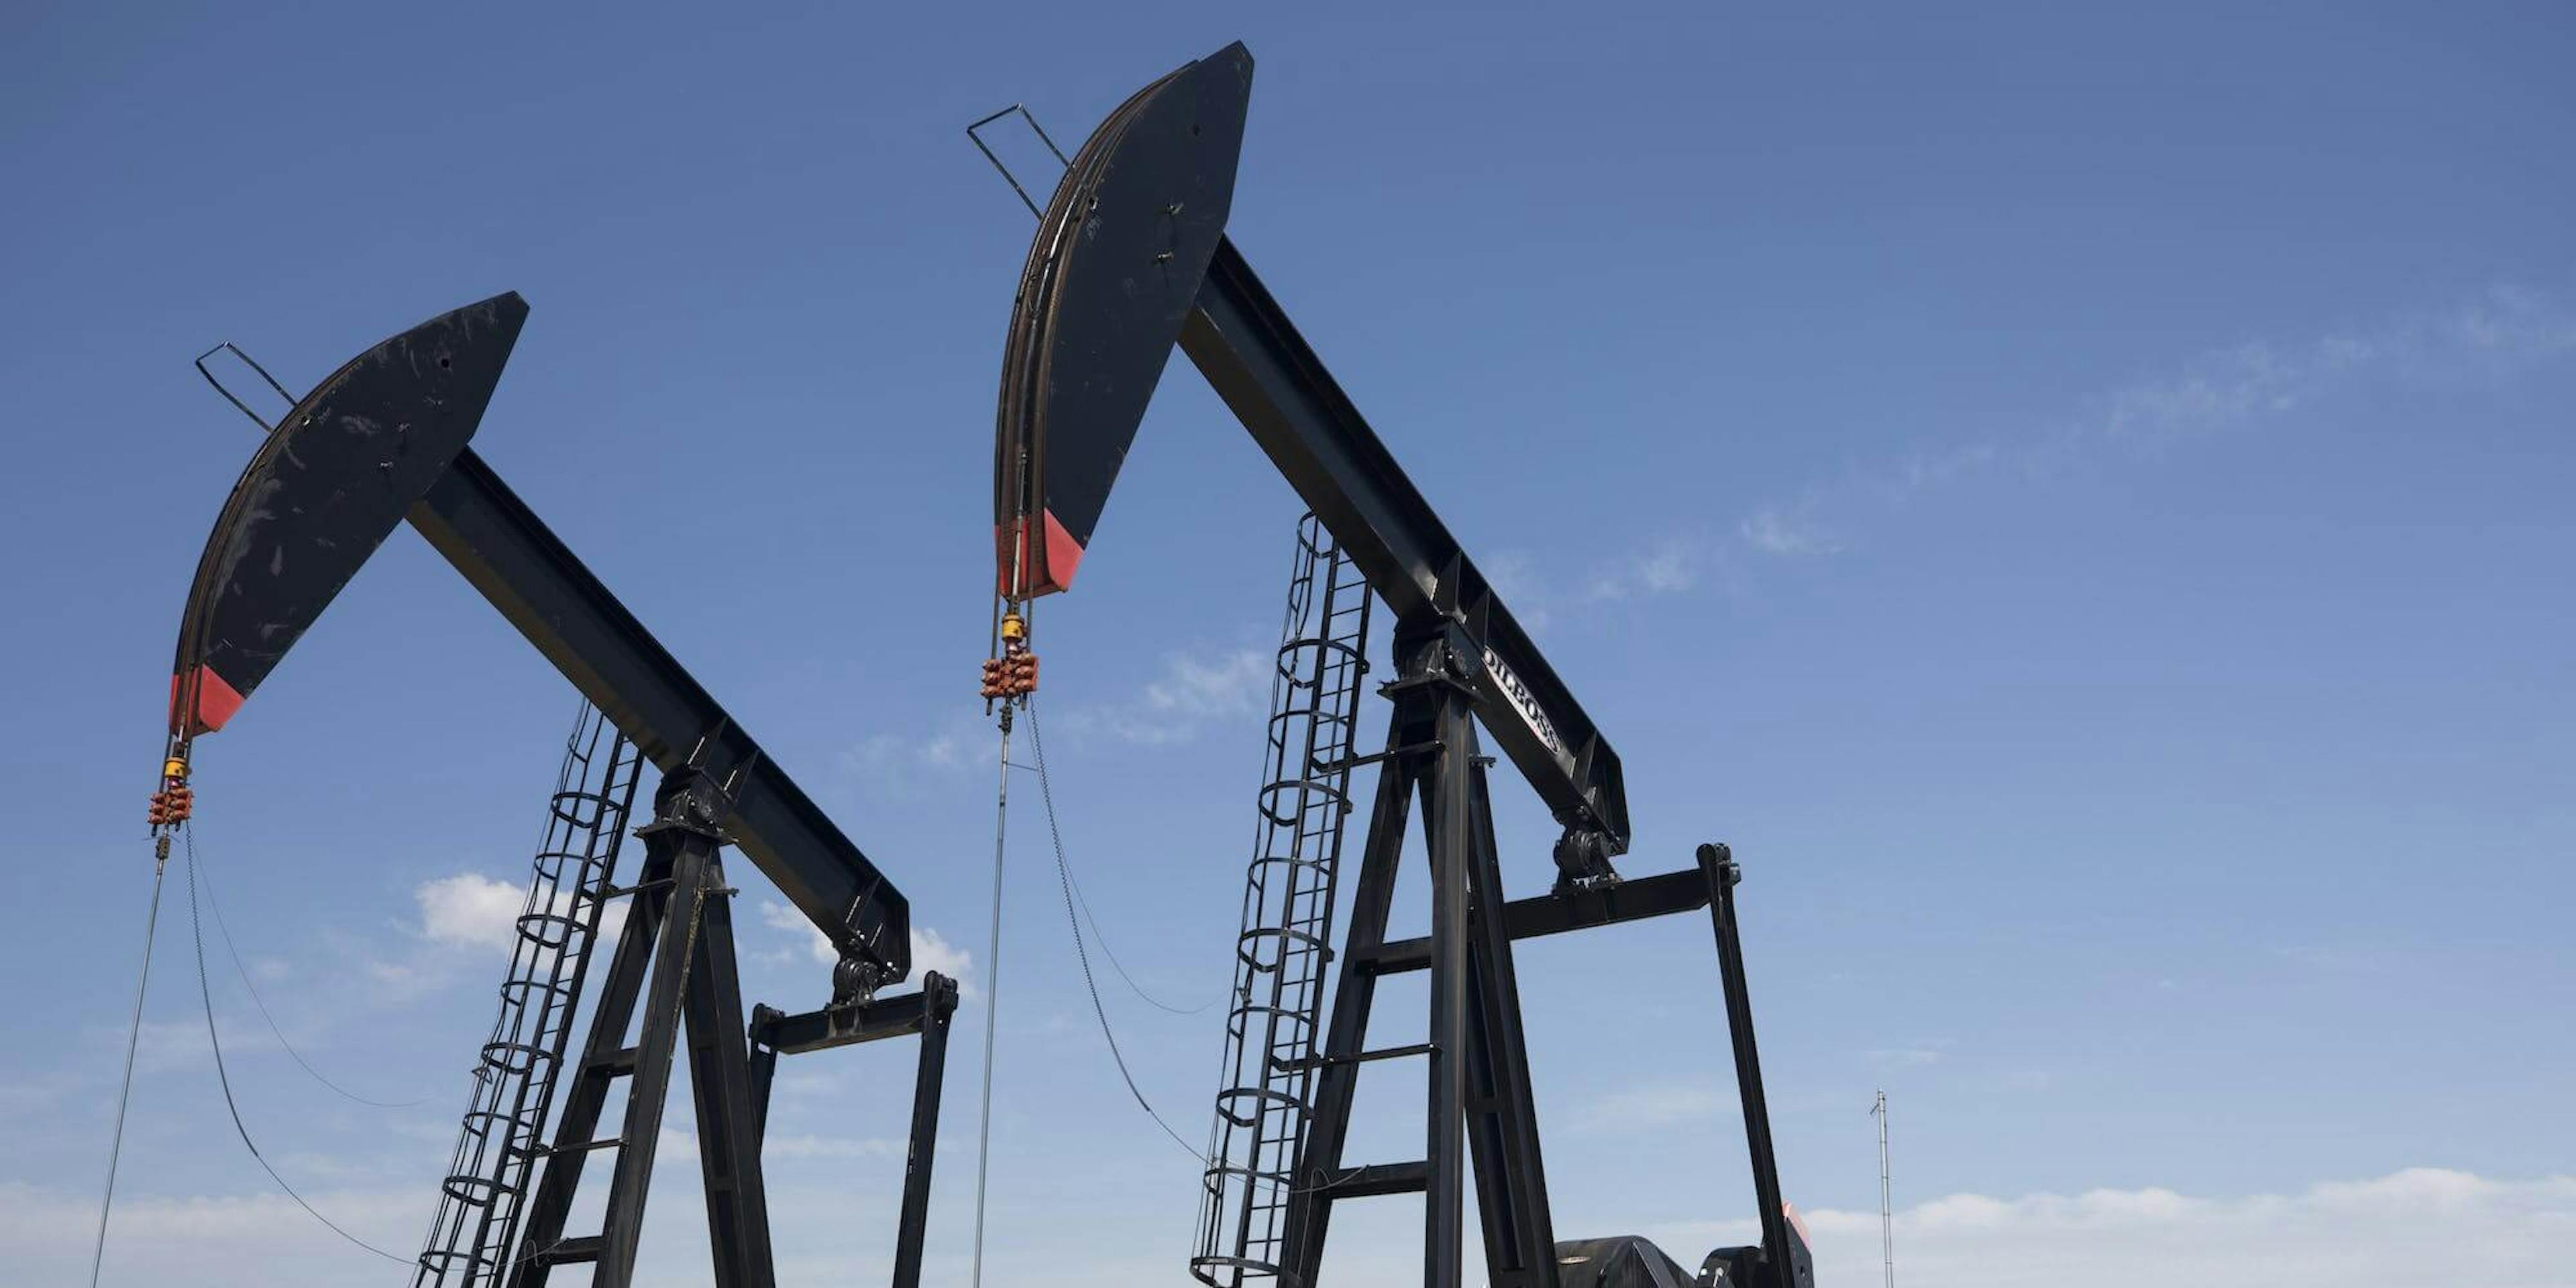 Two large oil pumps against a blue sky.